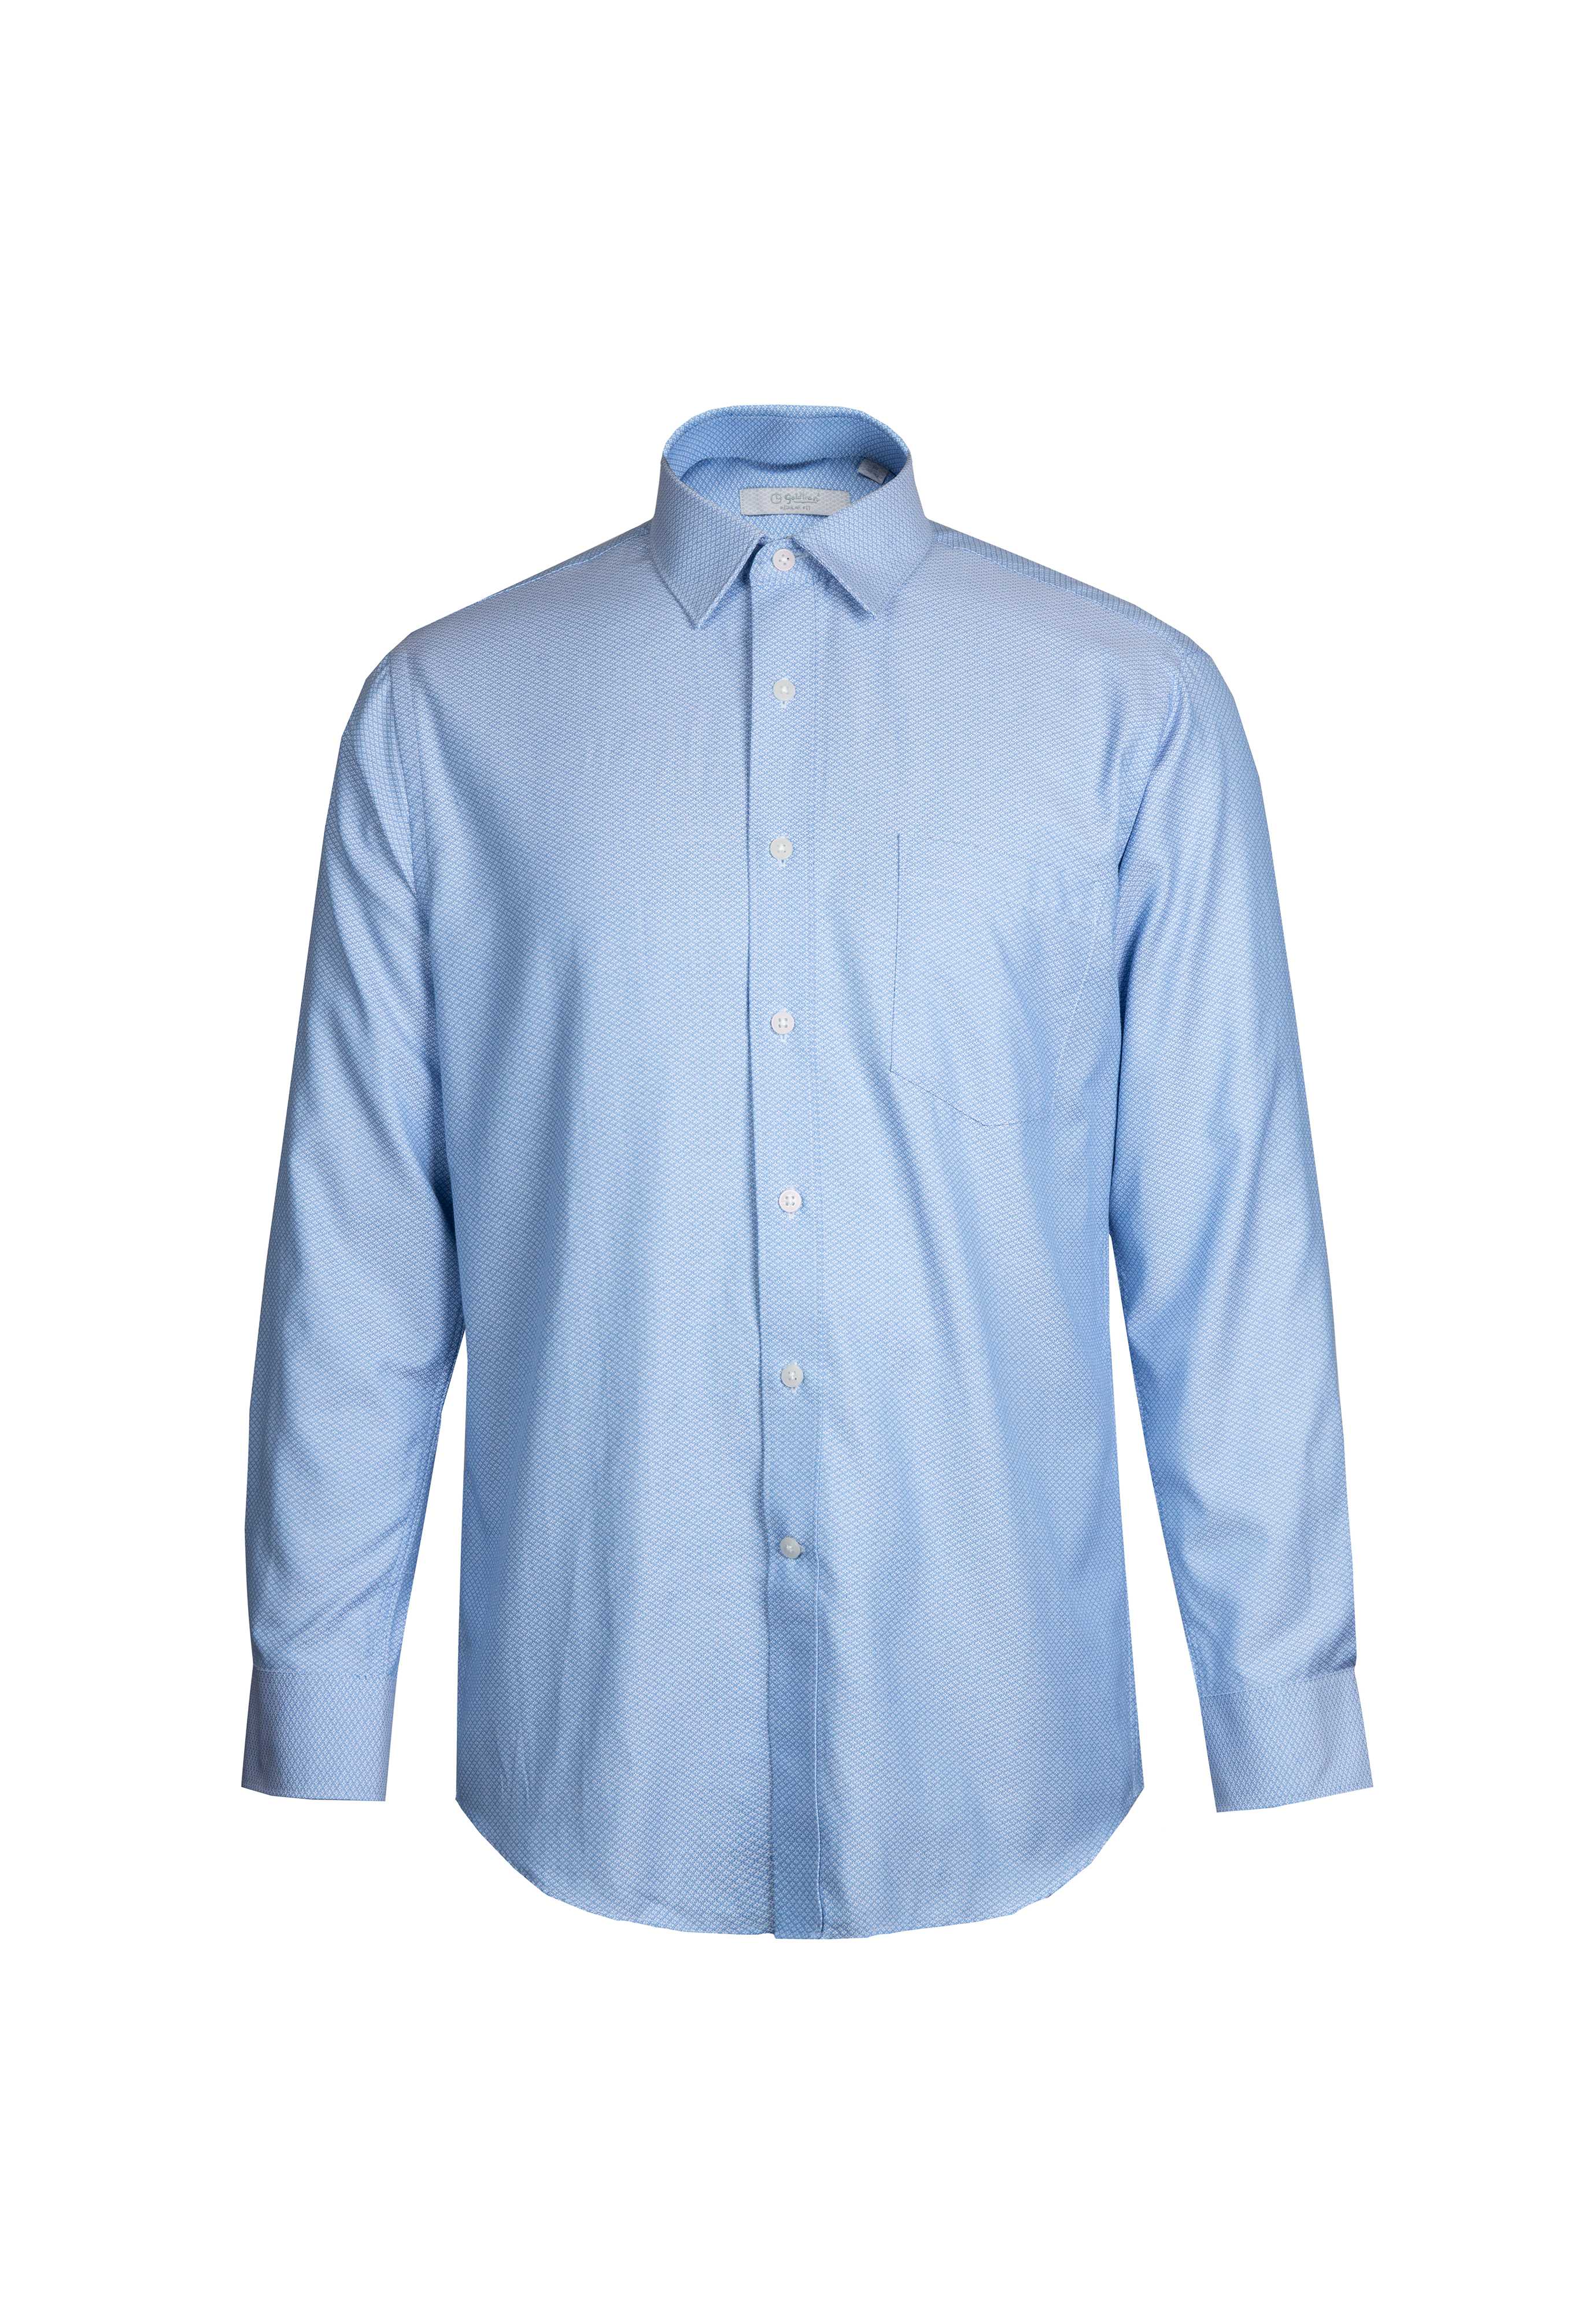 Goldlion Business Regular Fit Cotton Rich Long-Sleeved Shirt - White / Blue / Grey Printed